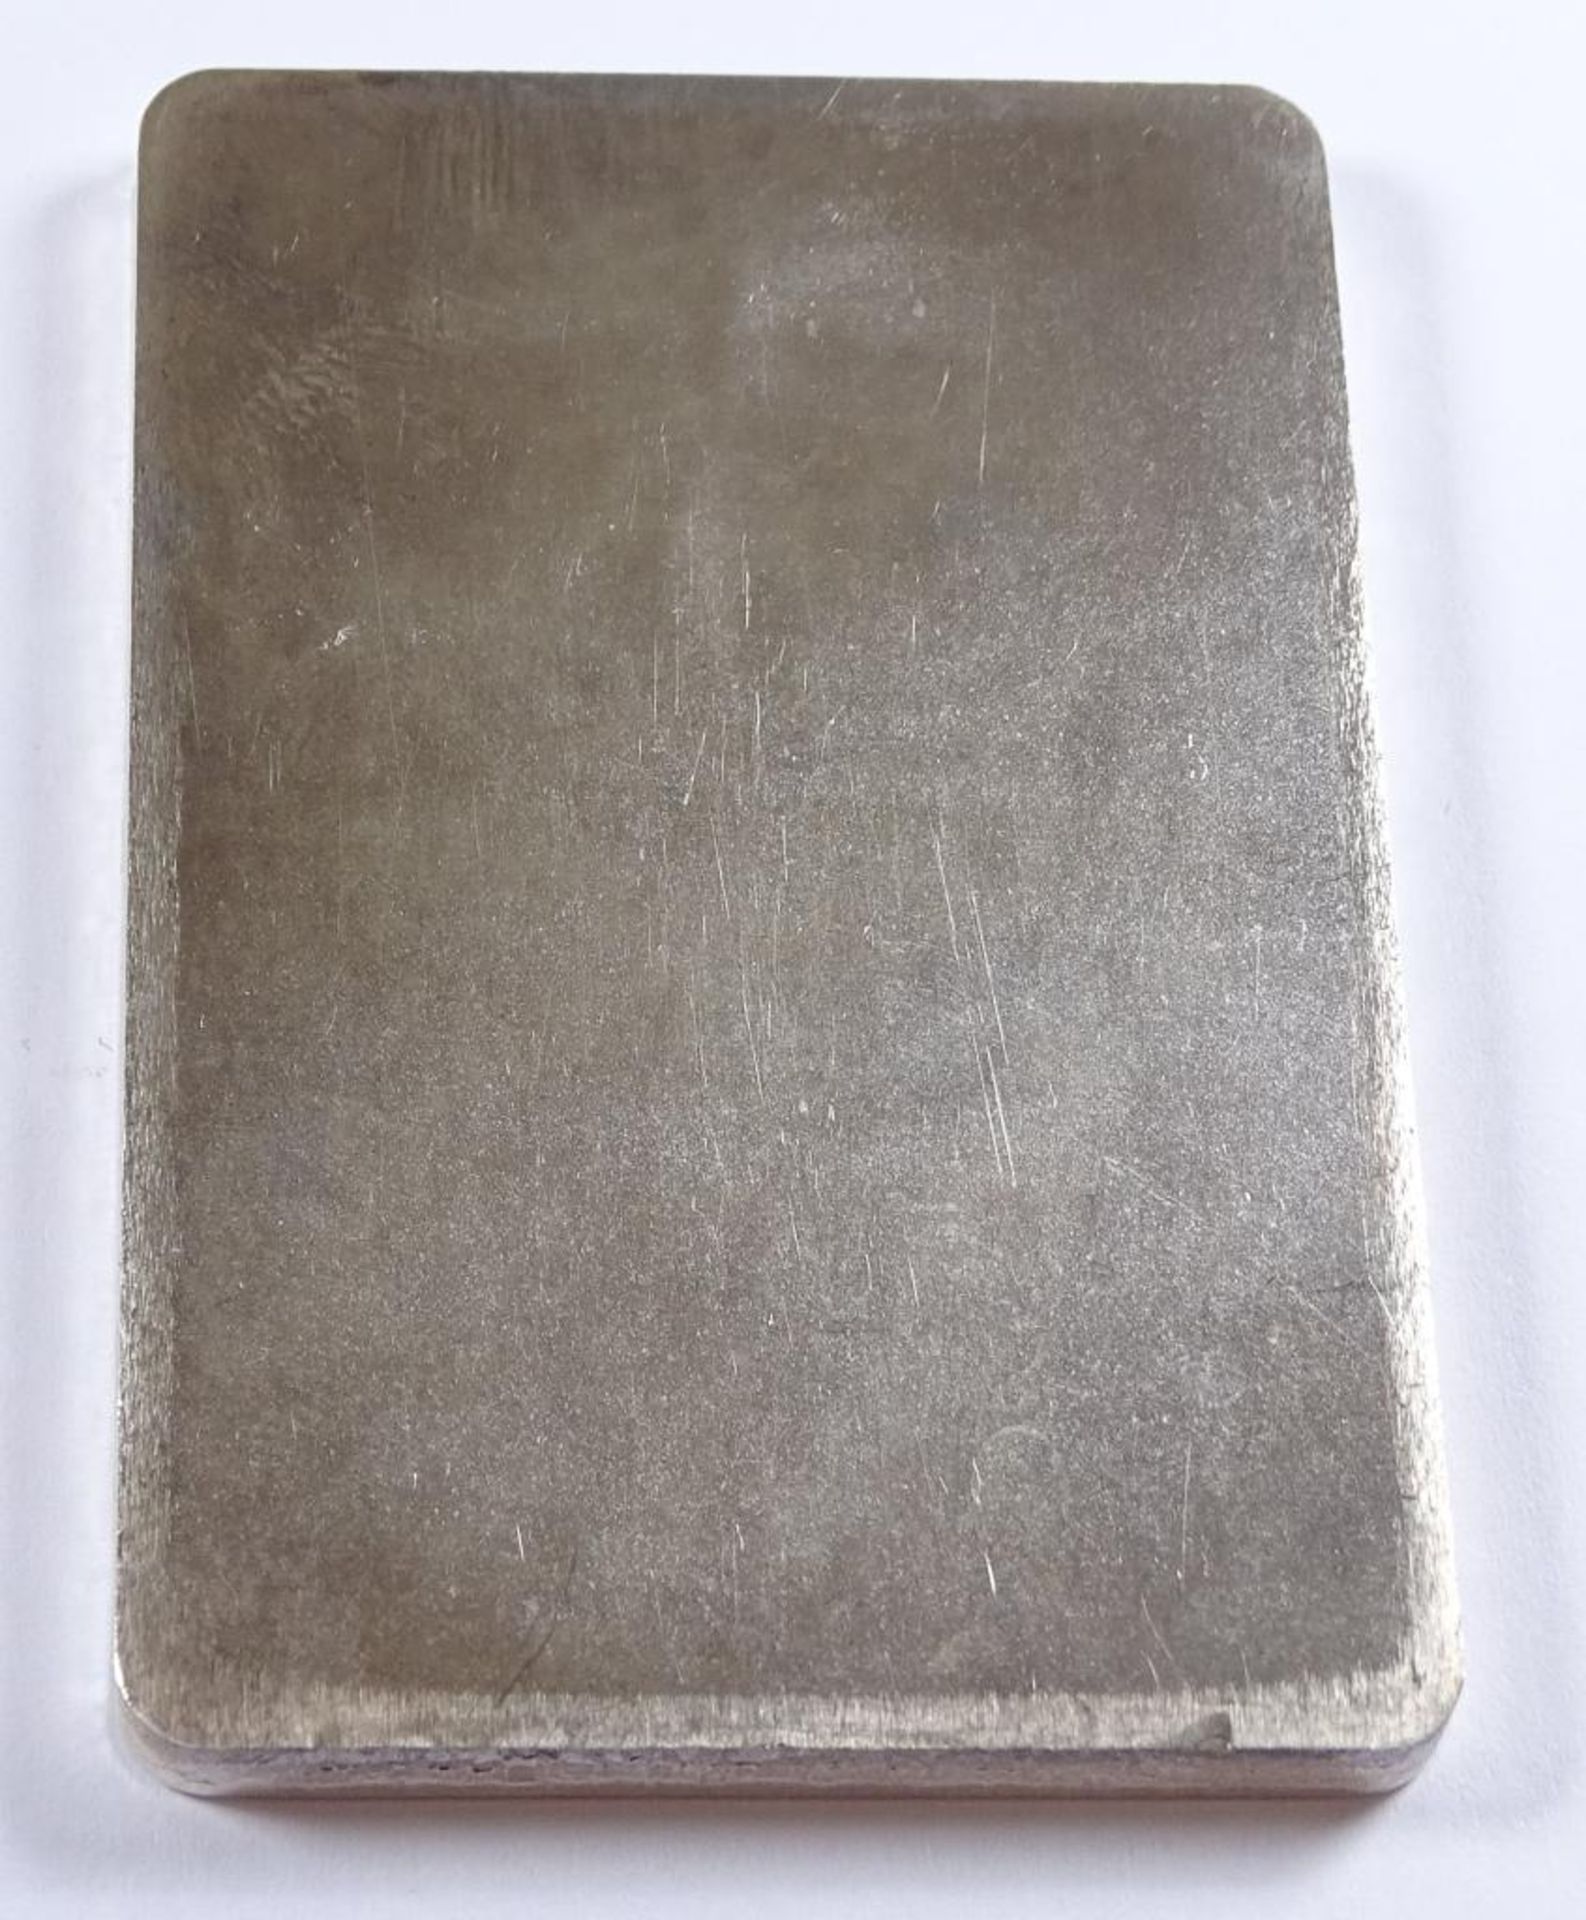 100g Feinsilber Barren,6,0x4,0 cm,Alters-u. Gebrauchsspuren - Bild 2 aus 2